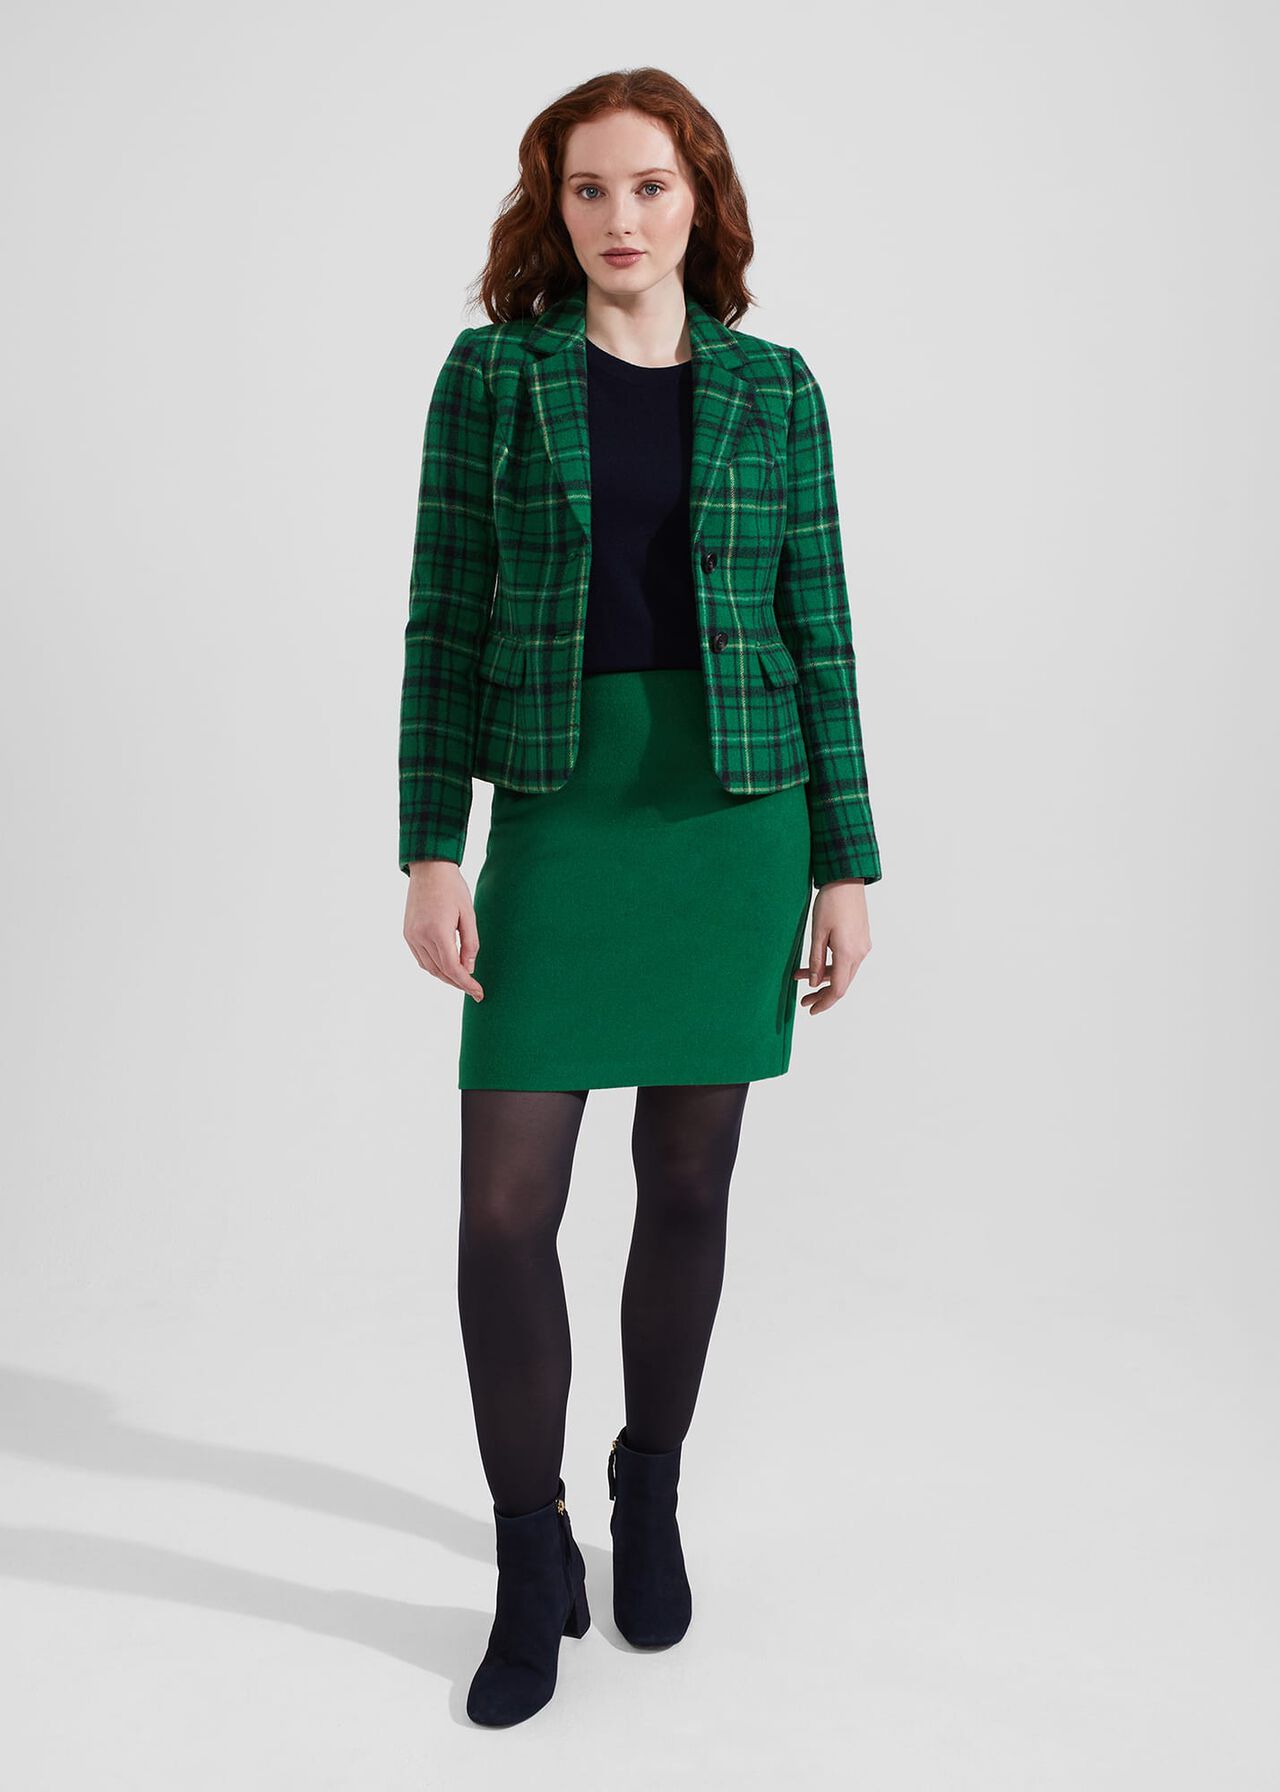 Maeve Wool Skirt, Green, hi-res